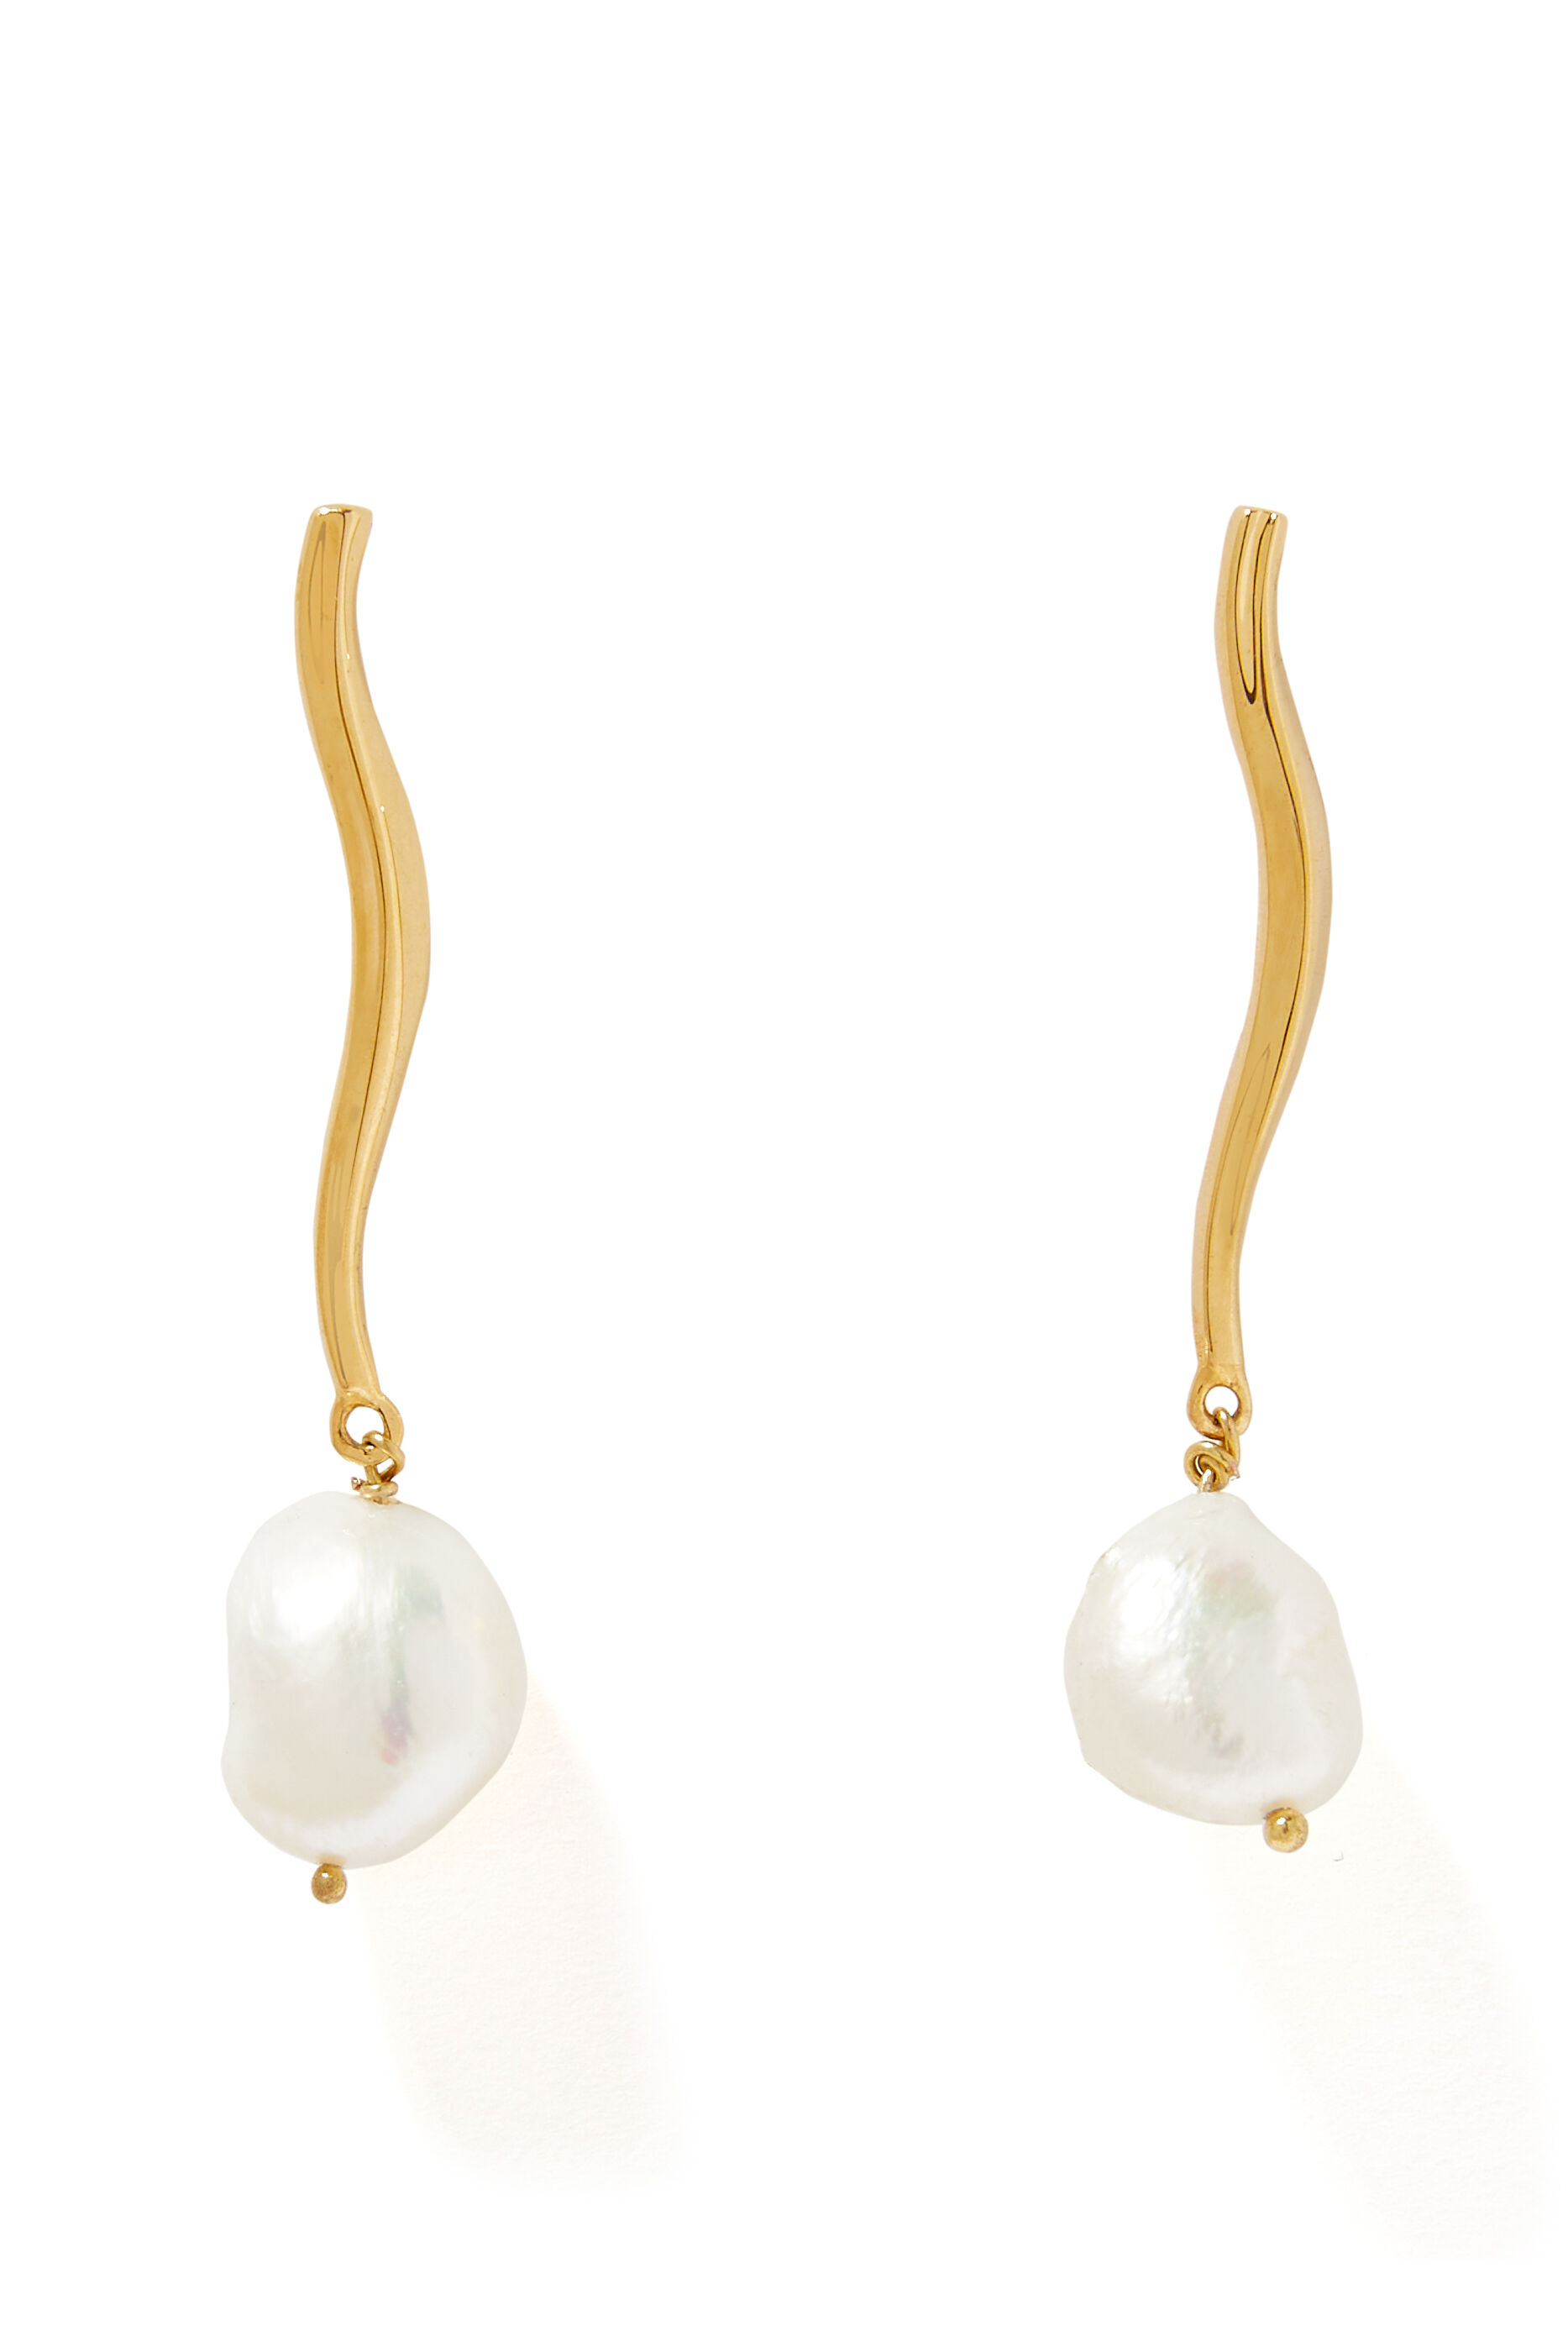 where to buy pearl earrings